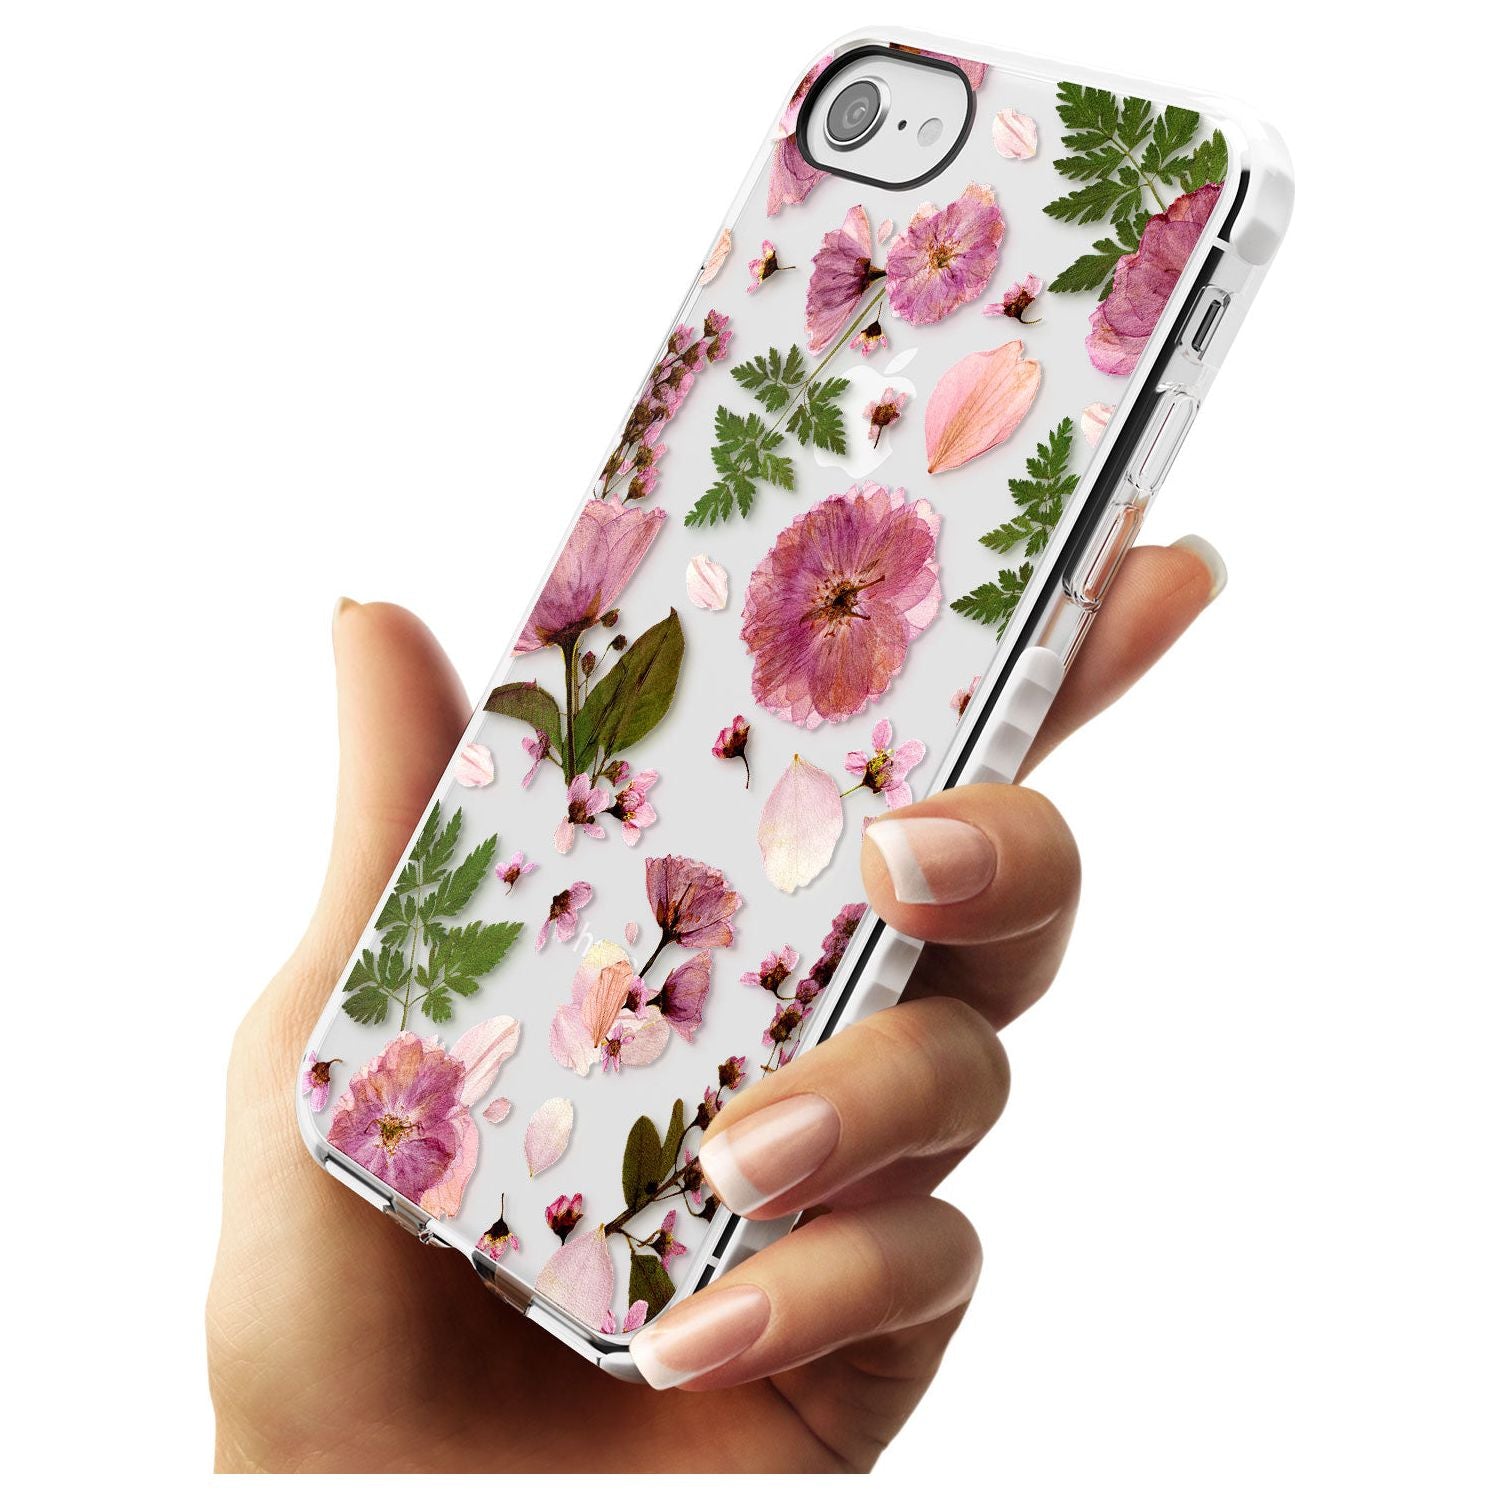 Natural Arrangement of Flowers & Leaves Design Impact Phone Case for iPhone SE 8 7 Plus